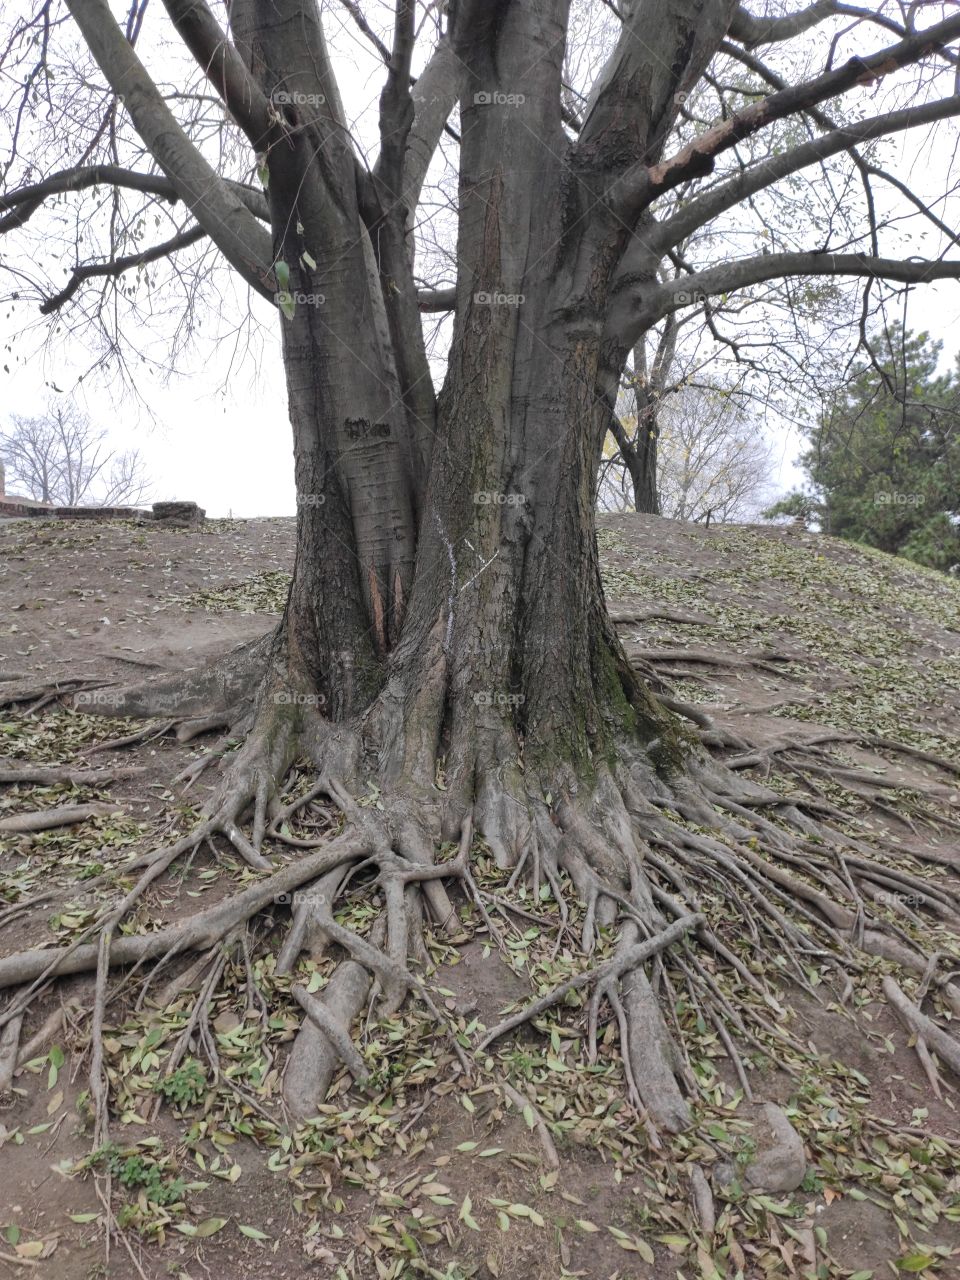 Belgrade Serbia tree roots